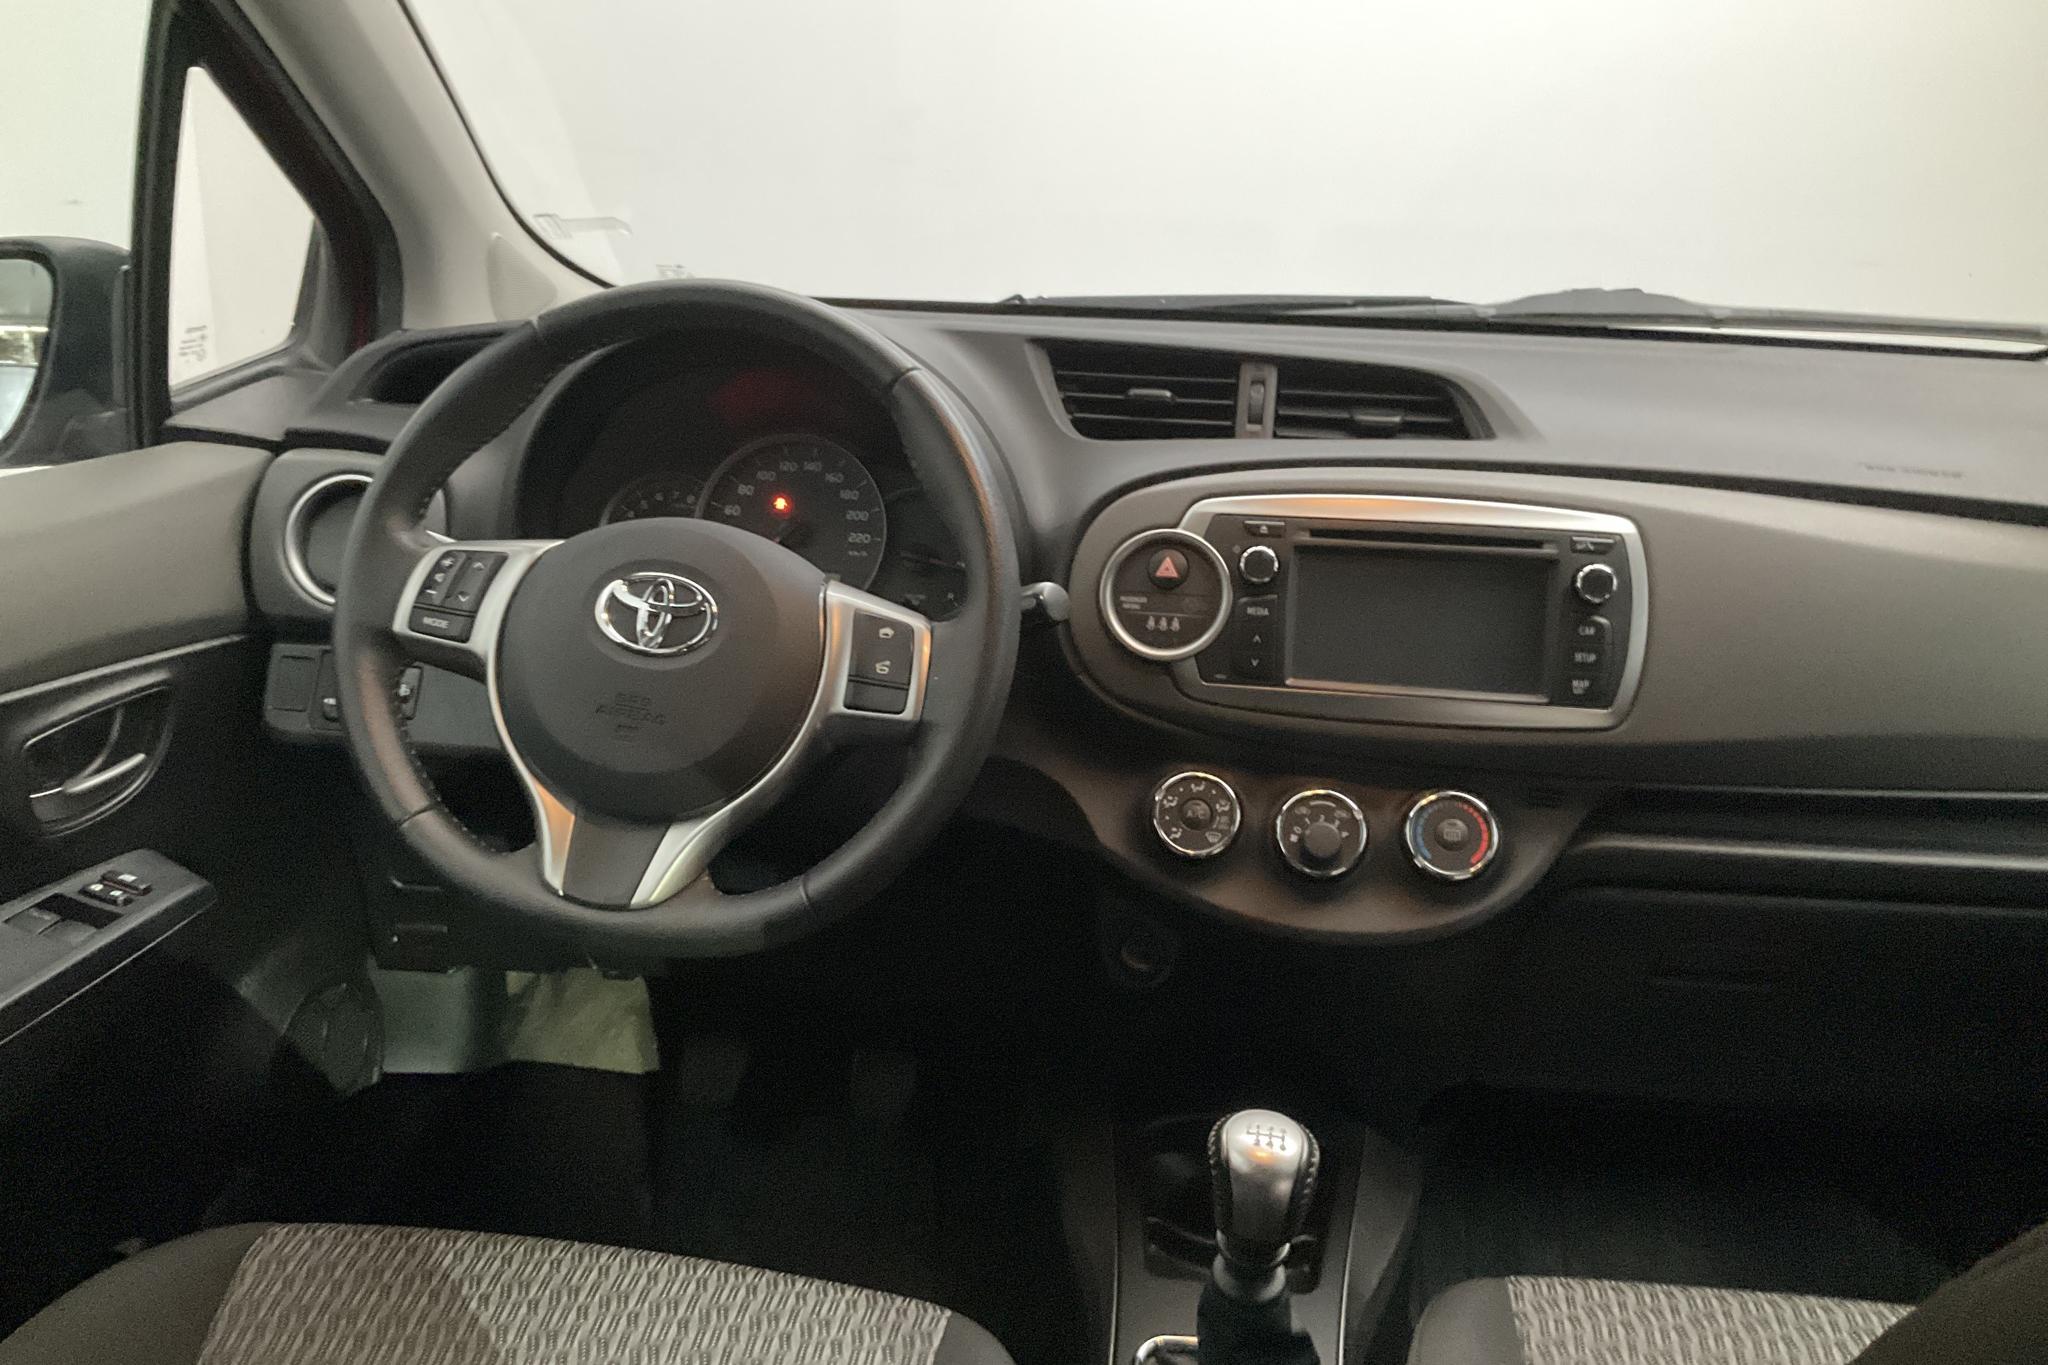 Toyota Yaris 1.33 5dr (100hk) - 17 296 mil - Manuell - röd - 2013